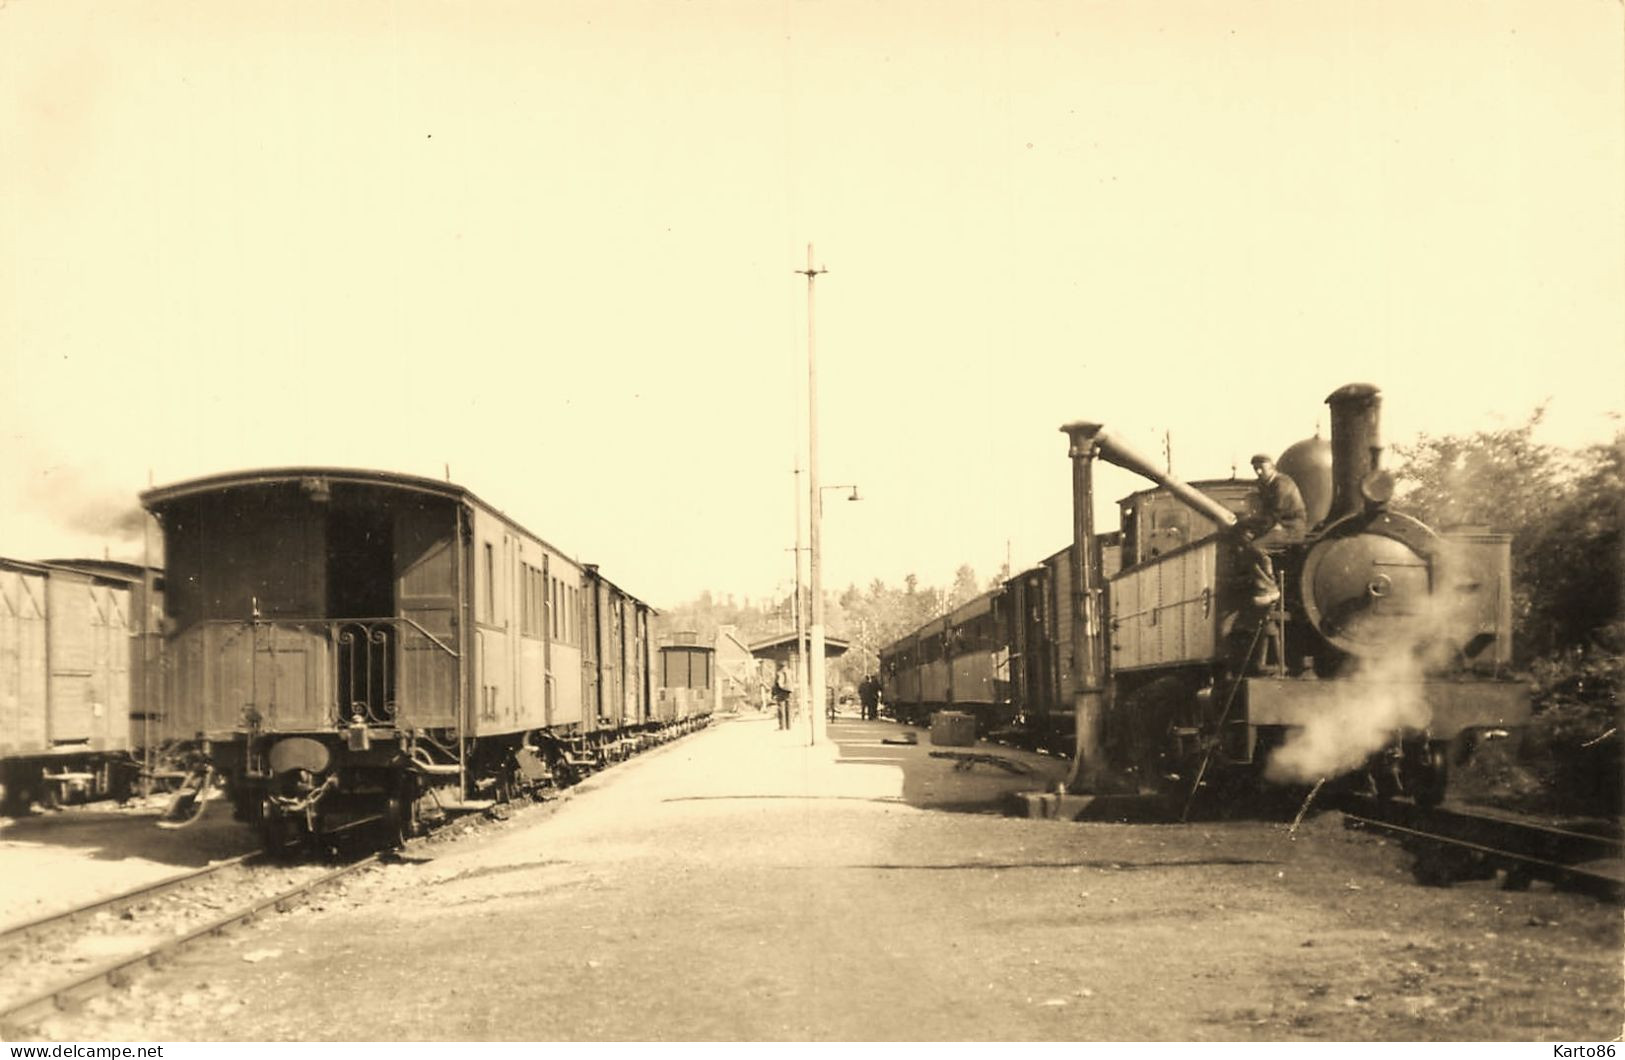 Callac * Carte Photo * Gare , La Ligne Guingamp Carhaix * Chemin De Fer * Train Locomotive Machine * 1948 - Callac